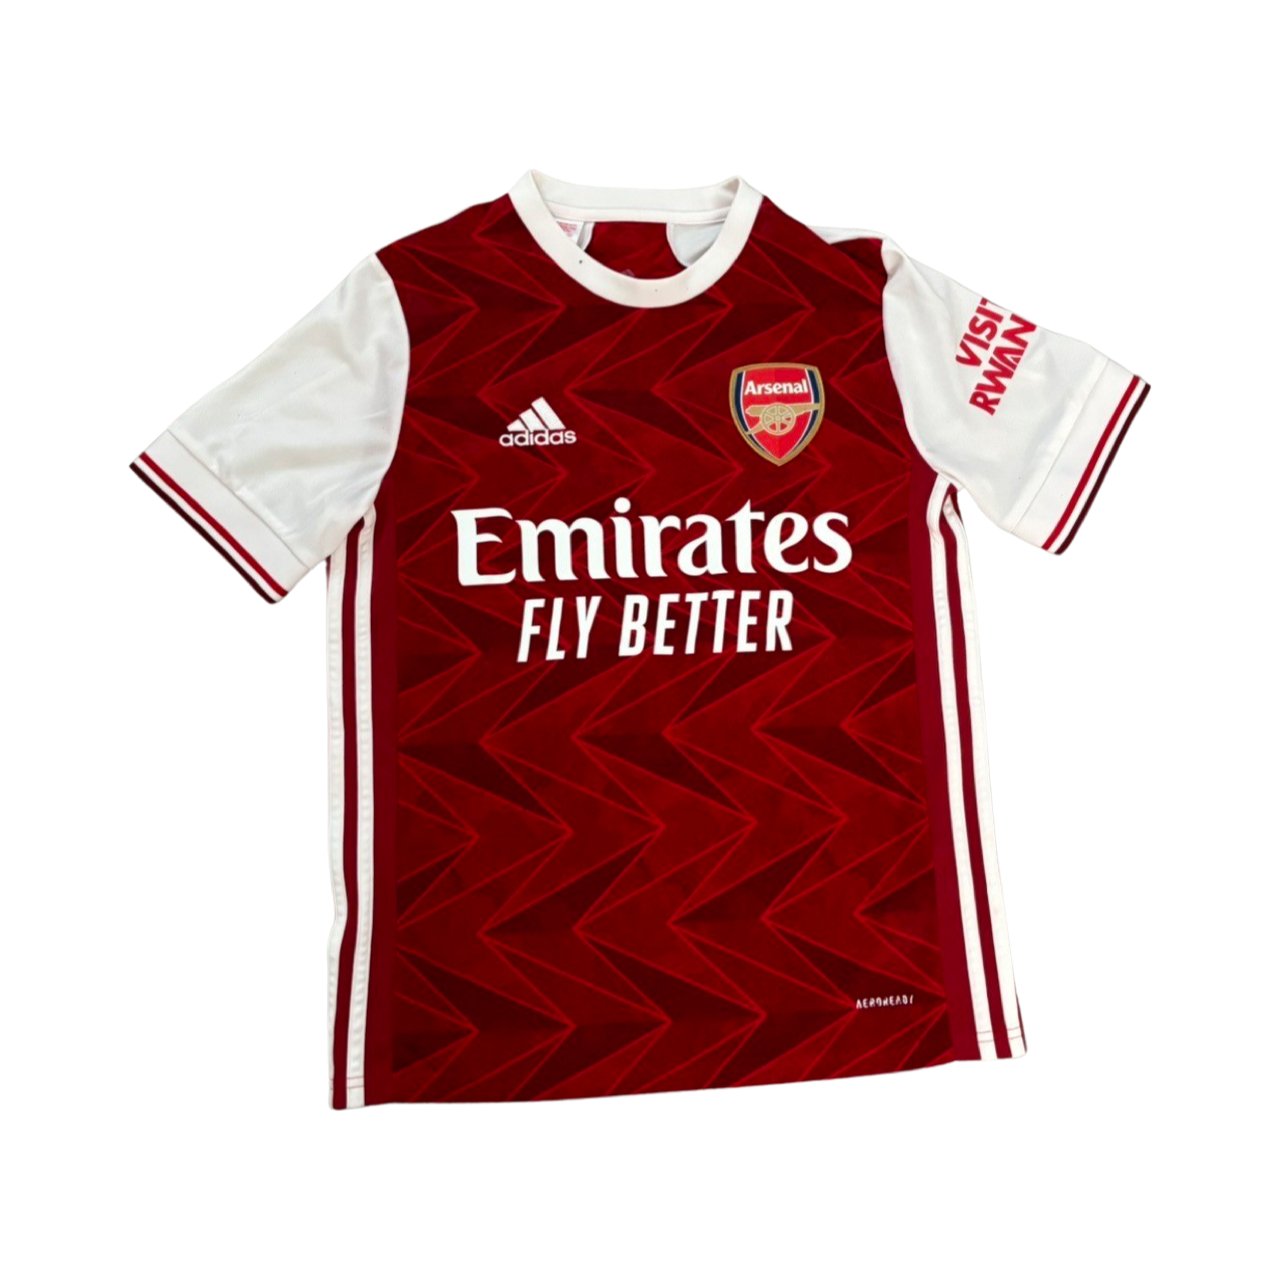 Arsenal FC Aubameyang - Adidas children football jersey 13/14YO - Preloved - Soul and Sense Streetwear